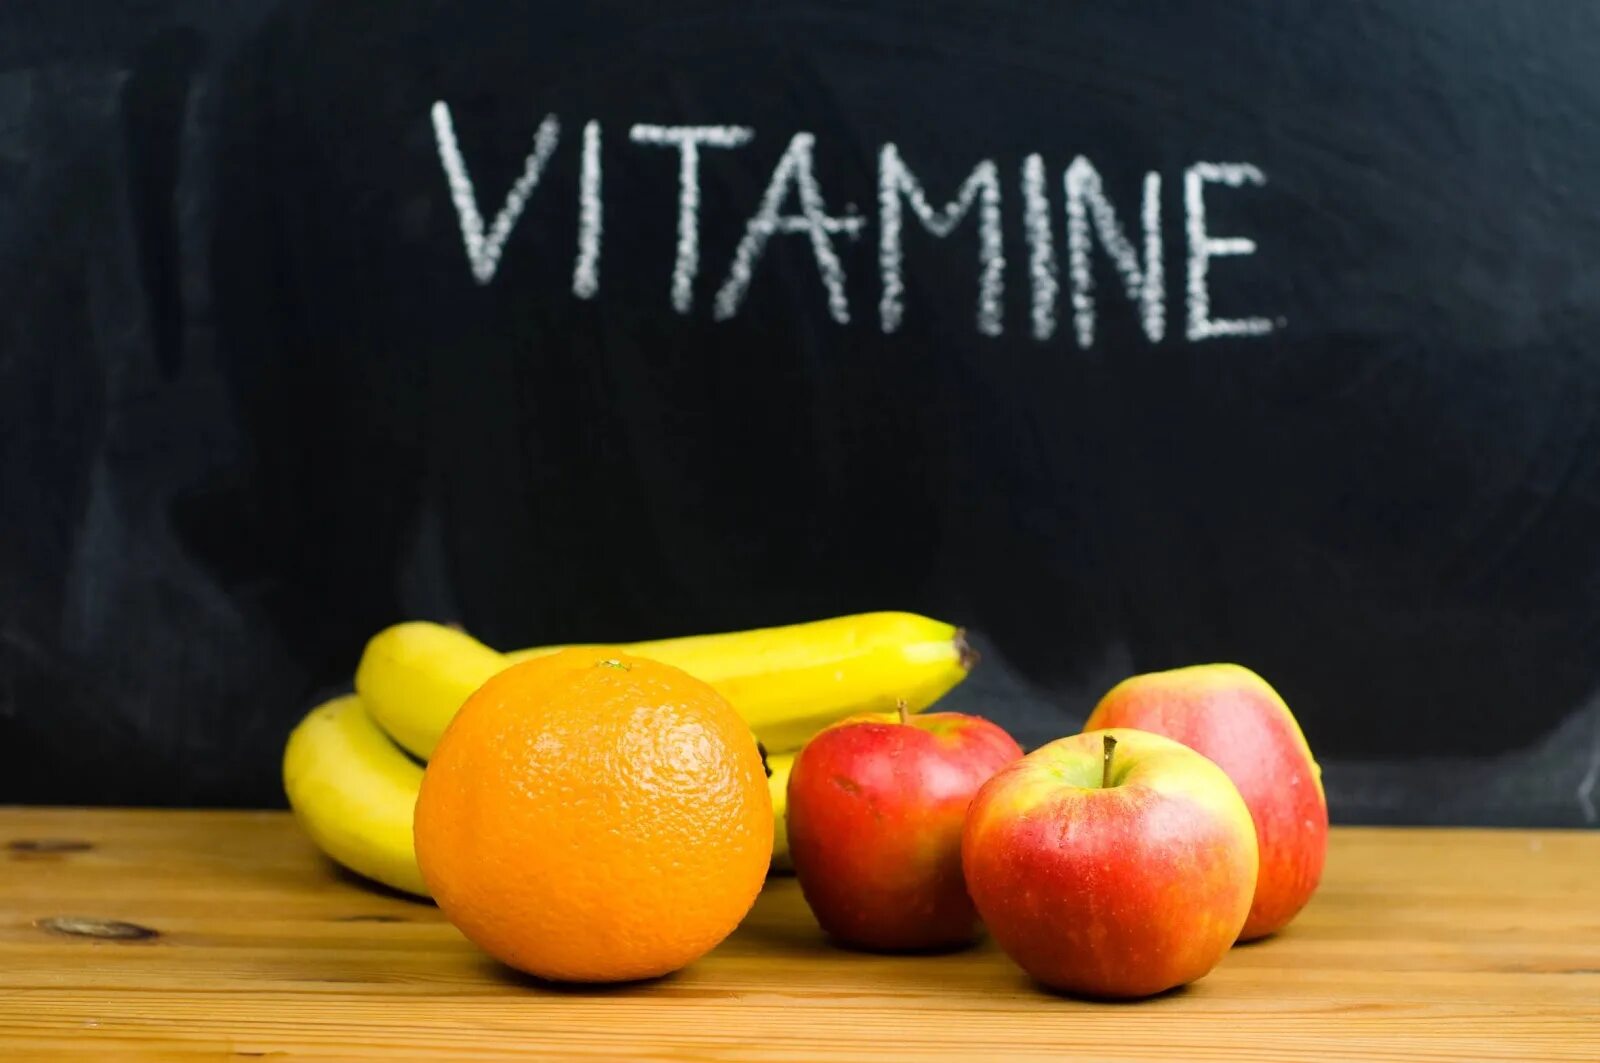 Much vitamins. Витамины фон. Витамины обои. Витамины надпись. Витамины на черном фоне.